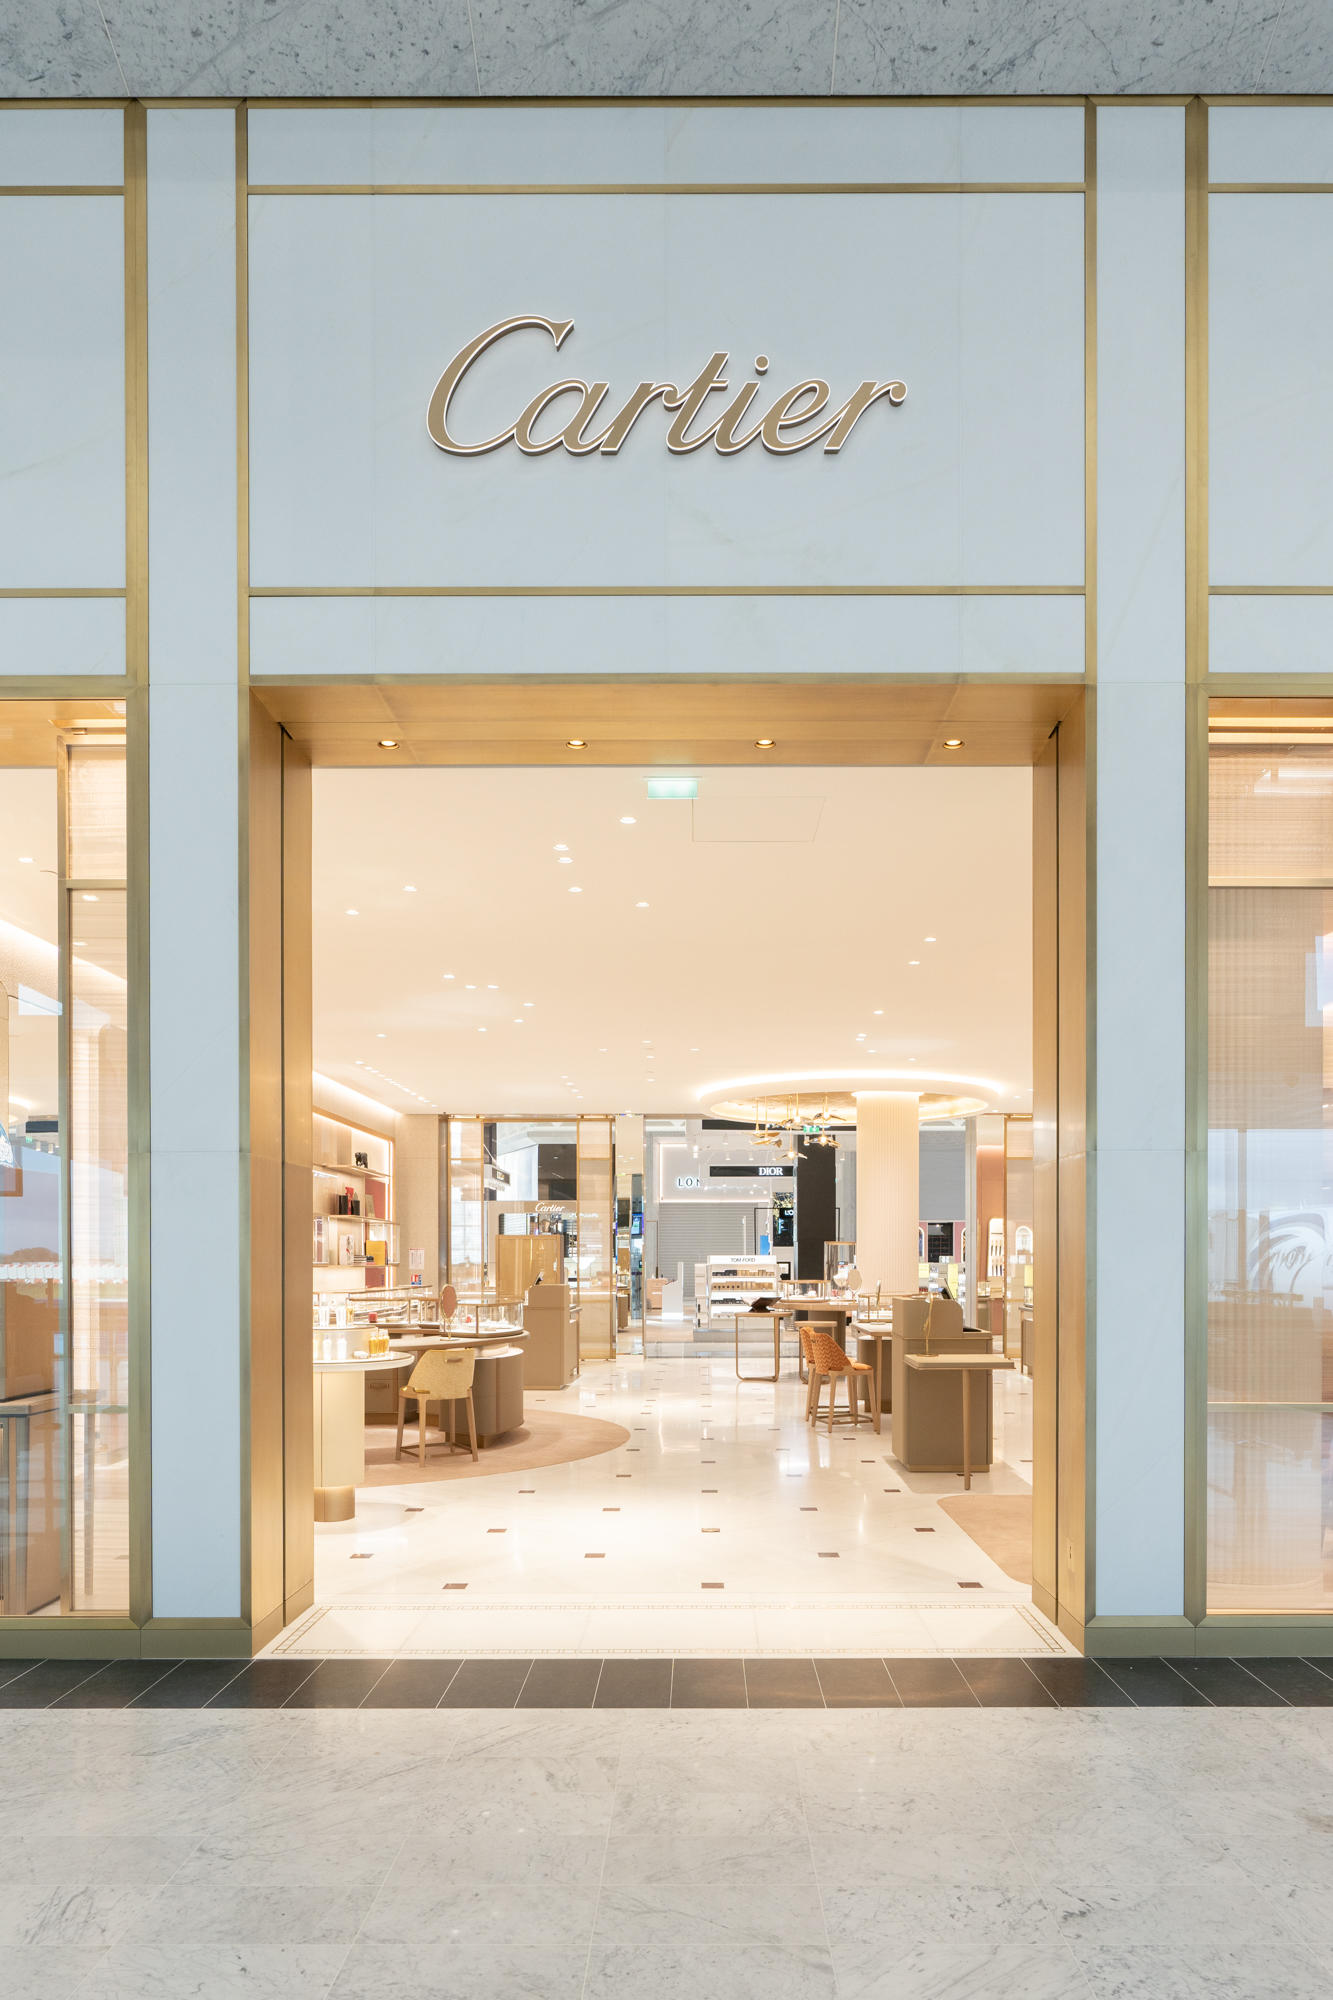 Images Cartier